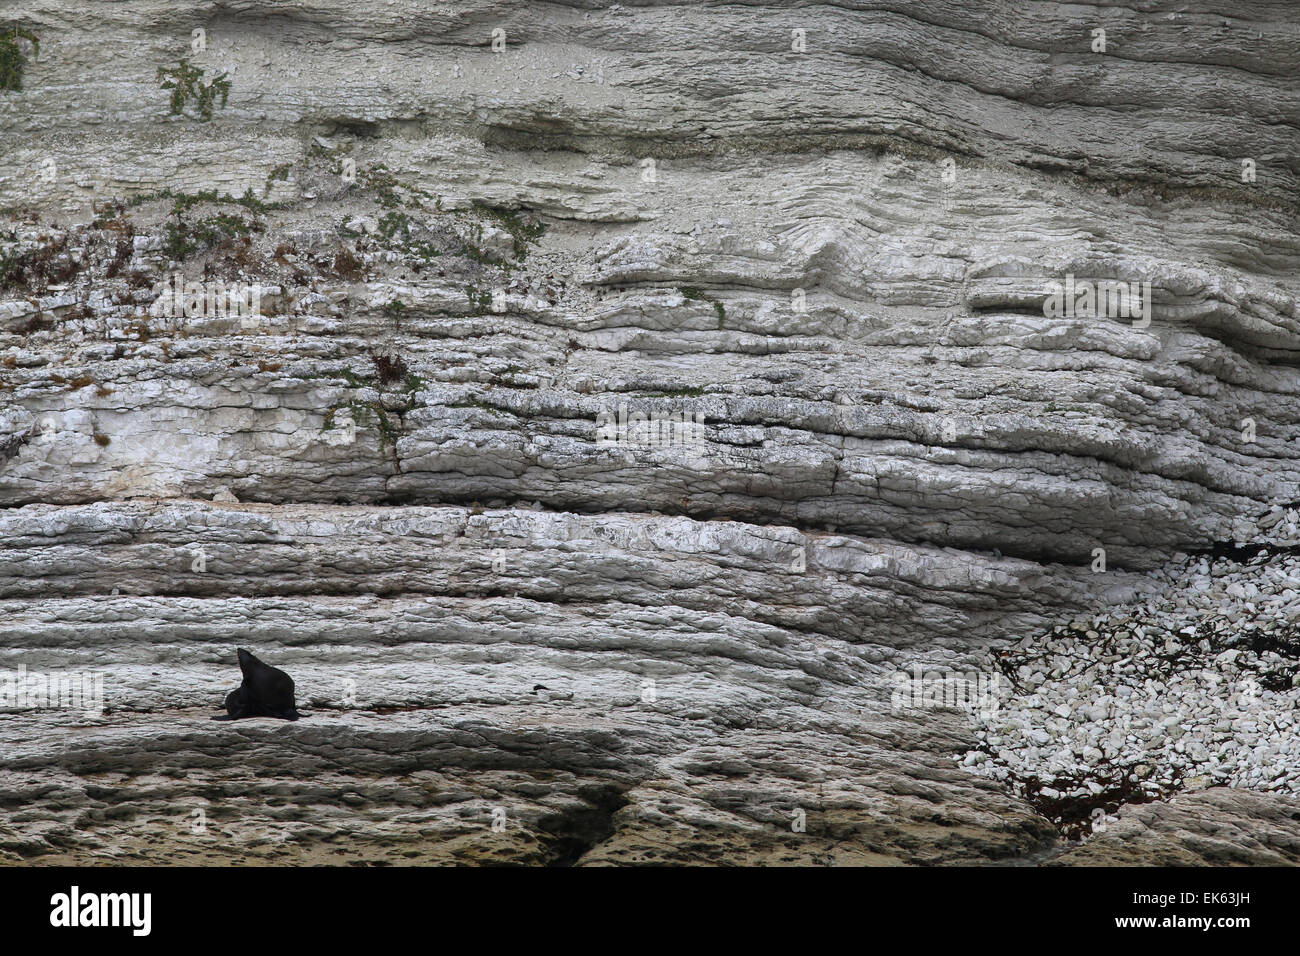 New Zealand fur seal on Limestone rock layers and tide pools Kaikoura Peninsula South Island New Zealand Stock Photo